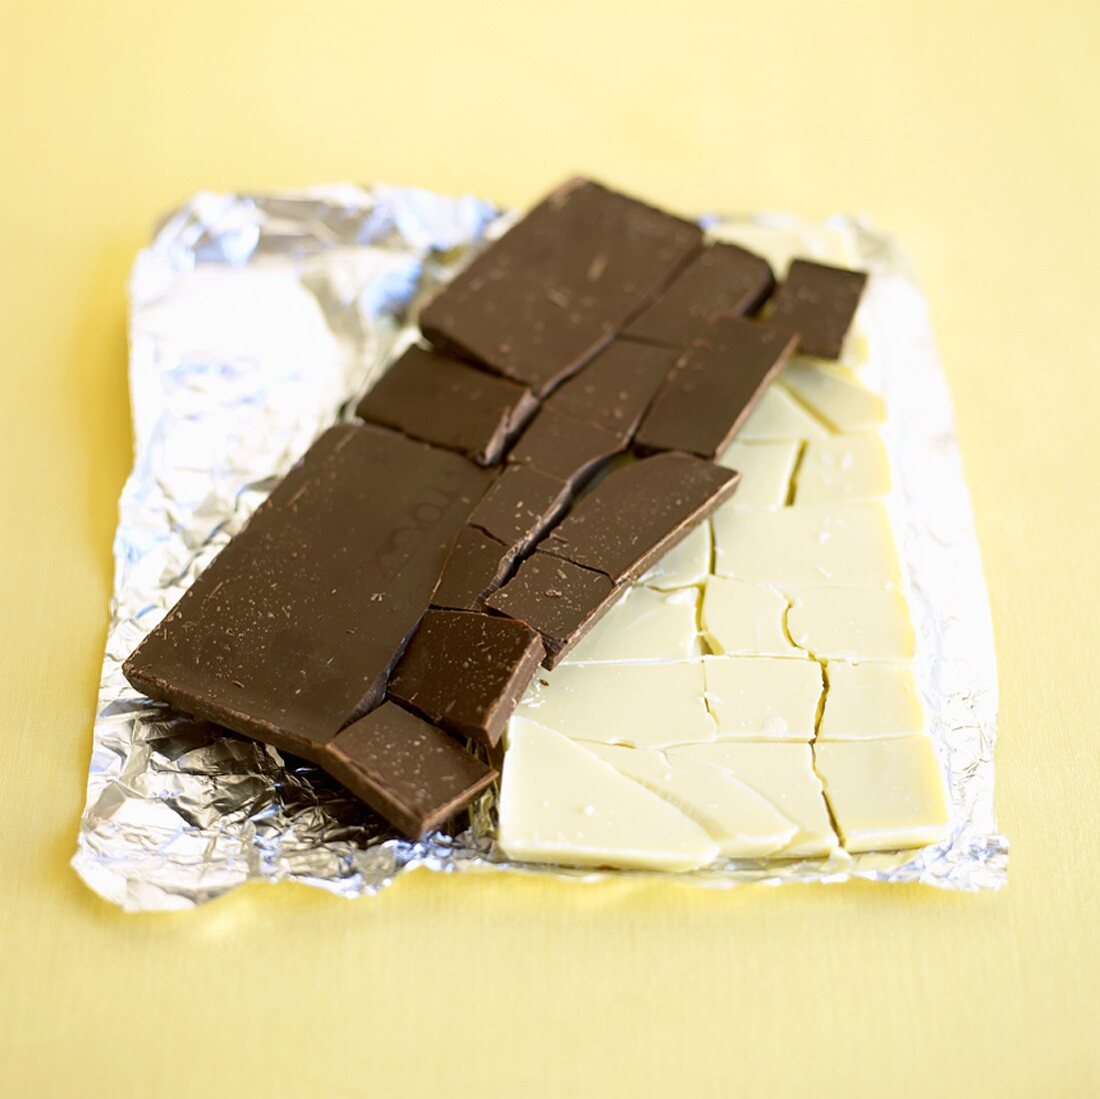 Two broken chocolate bars on aluminium foil